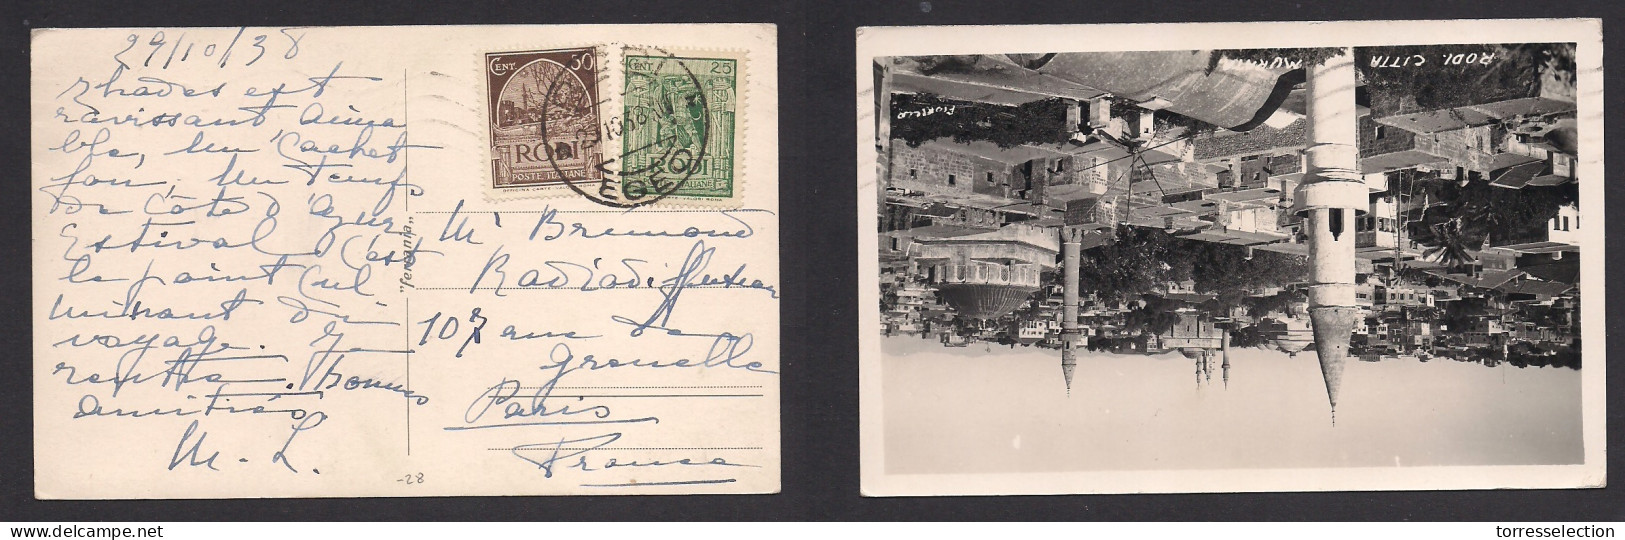 ITALIAN Colonies. 1938 (29 Oct) Egeo, Rodi - France, Paris. Multifkd Photo Ppc. Mosque. XSALE. - Unclassified